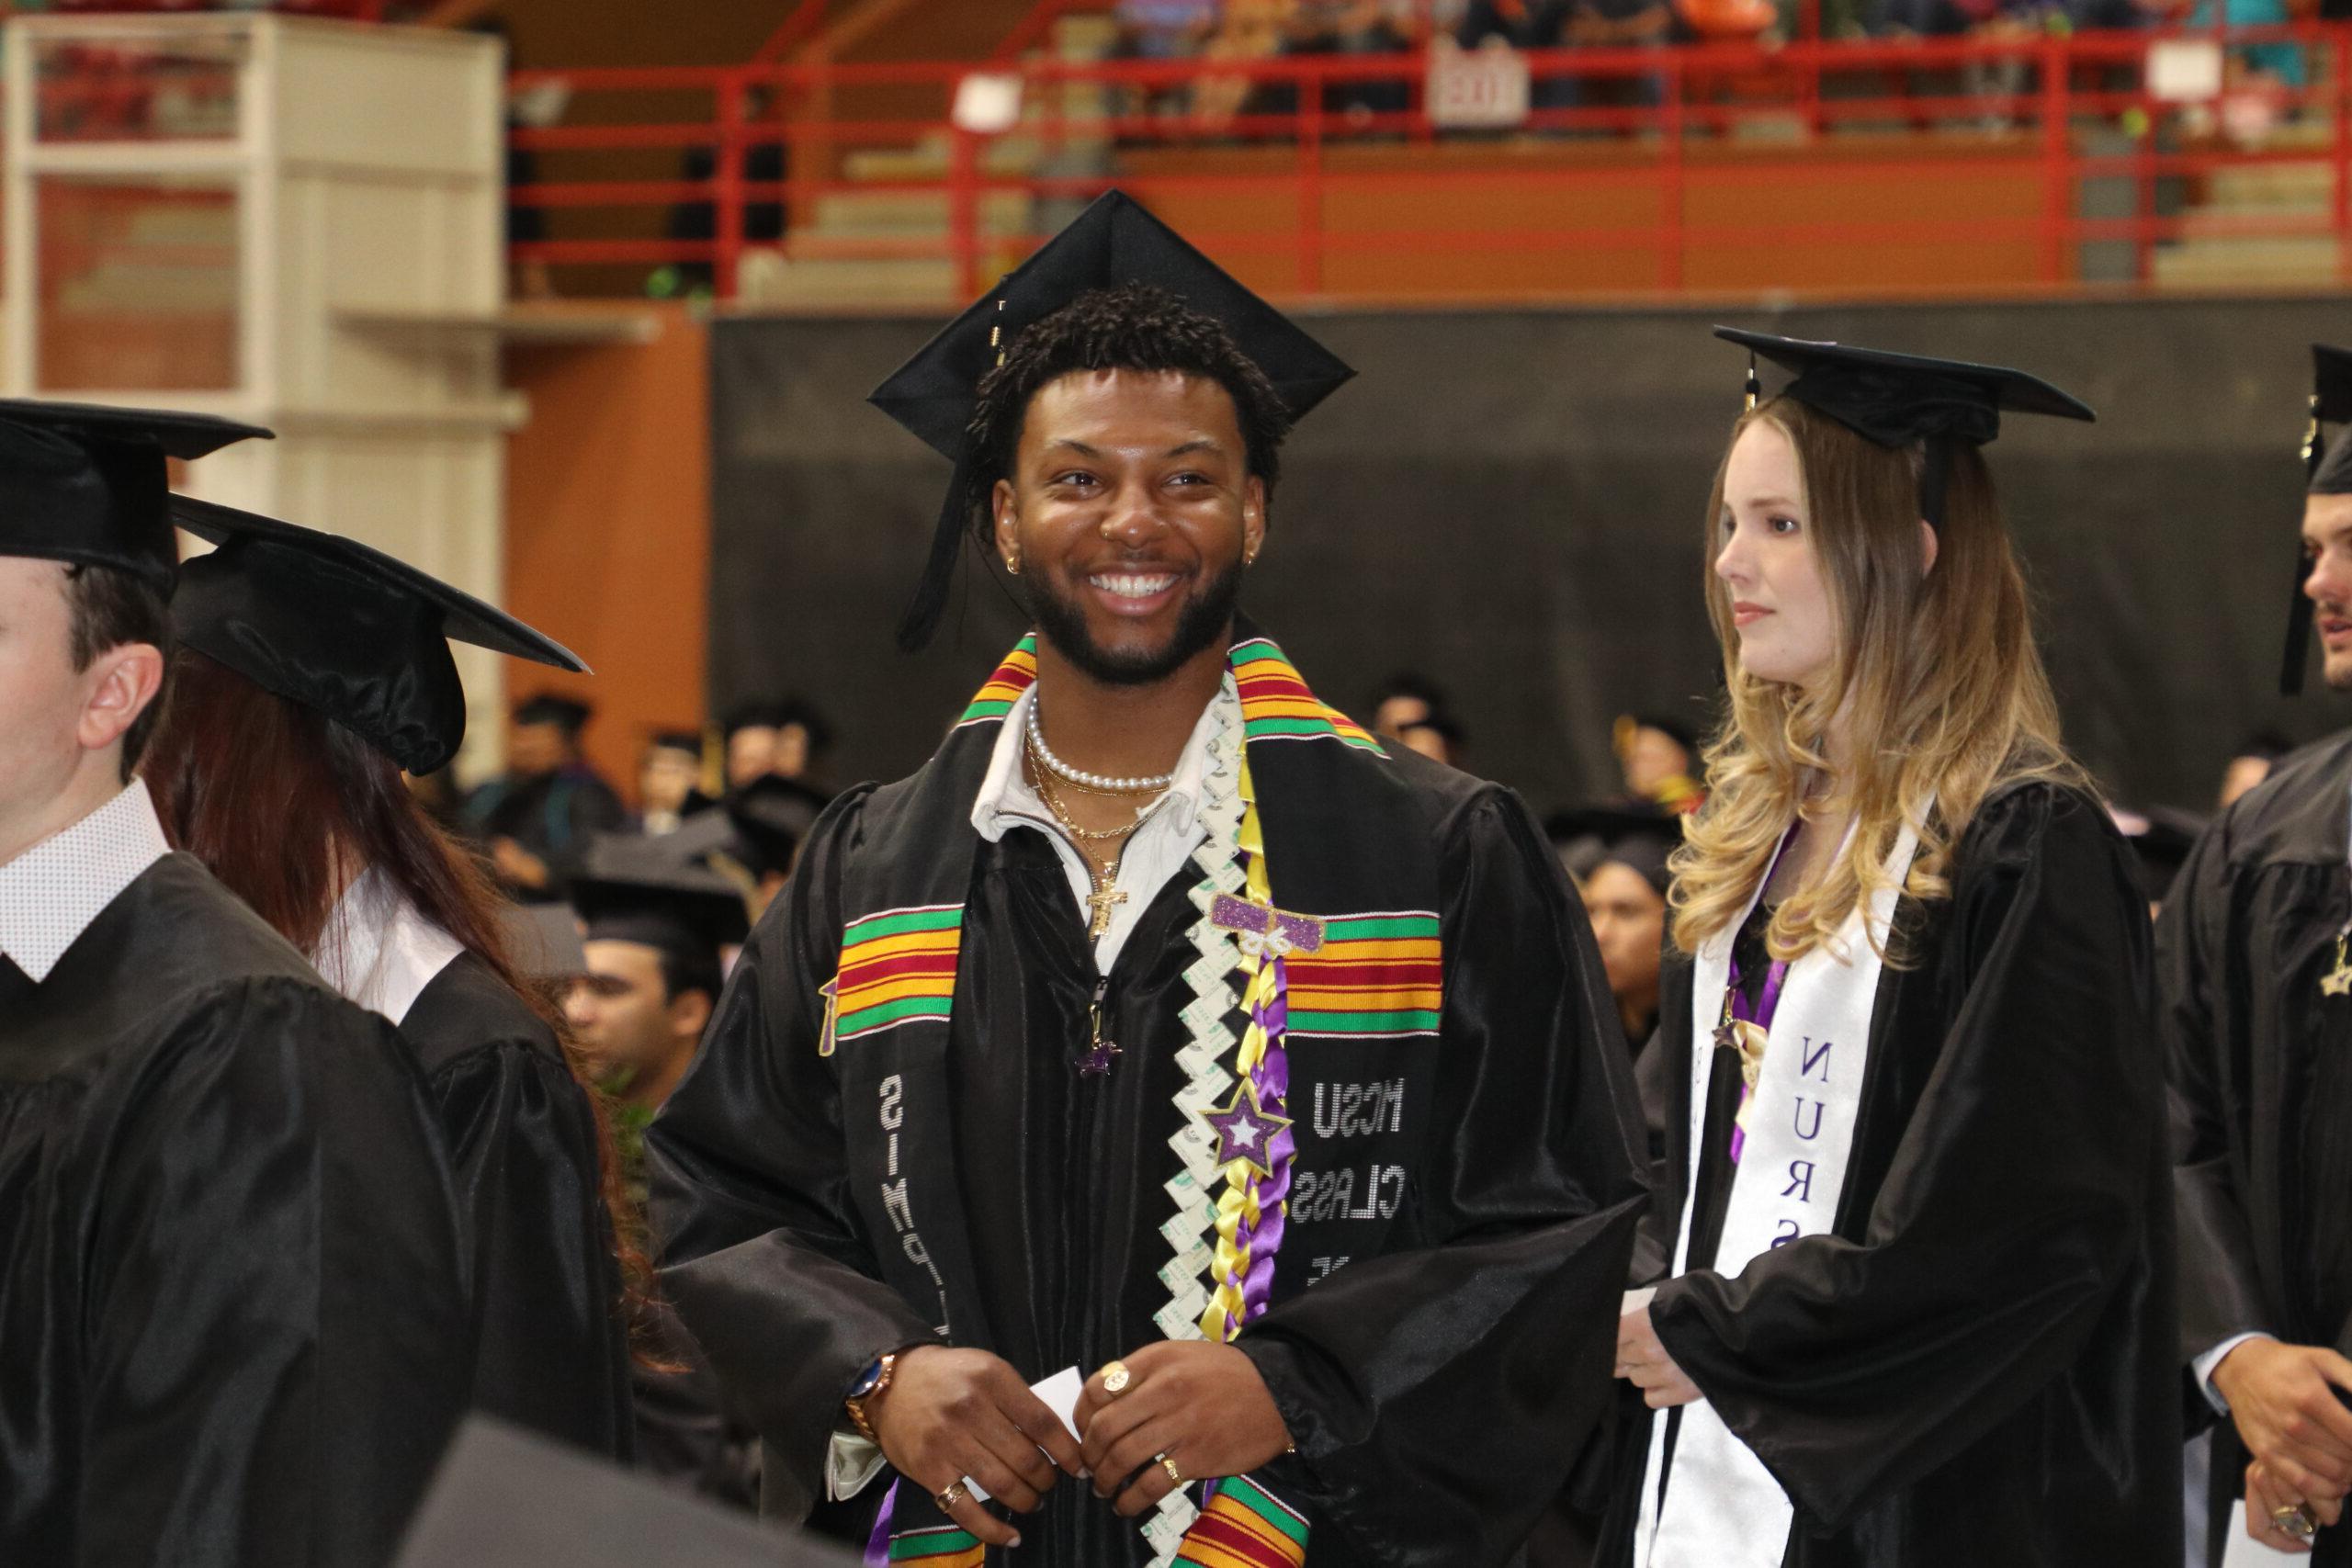 Man in graduation attire smiling